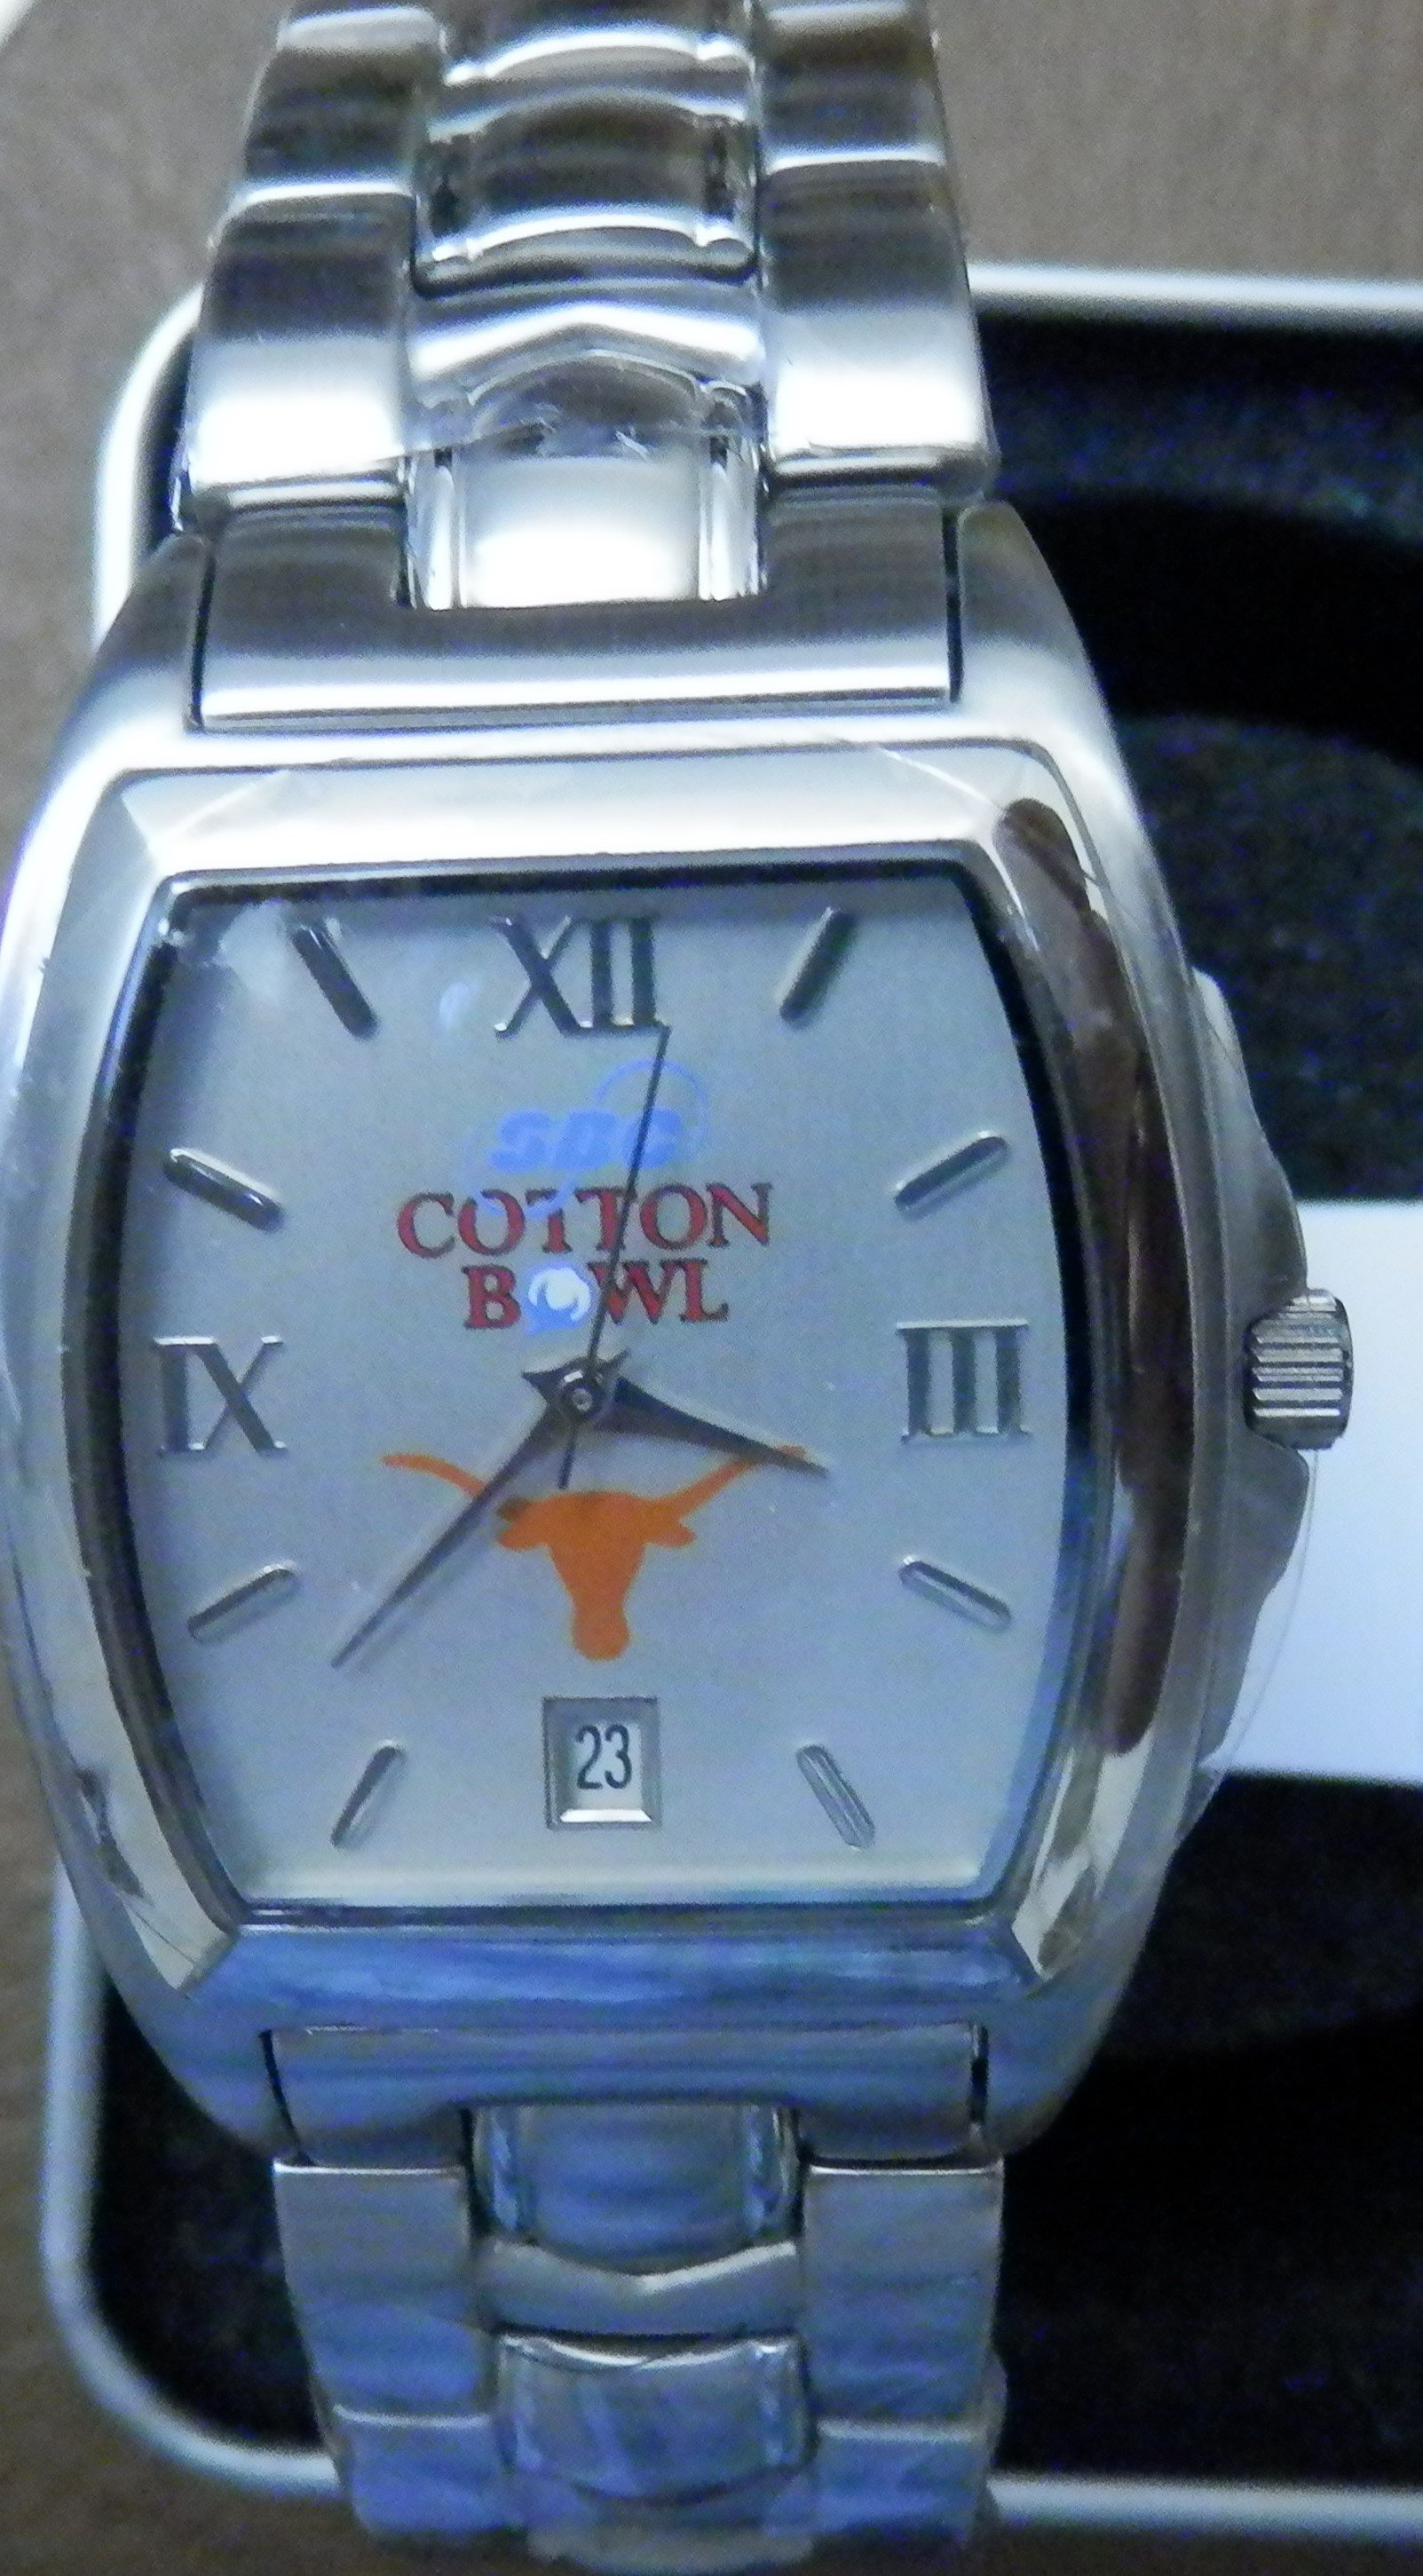 SBC Cotton Bowl watch